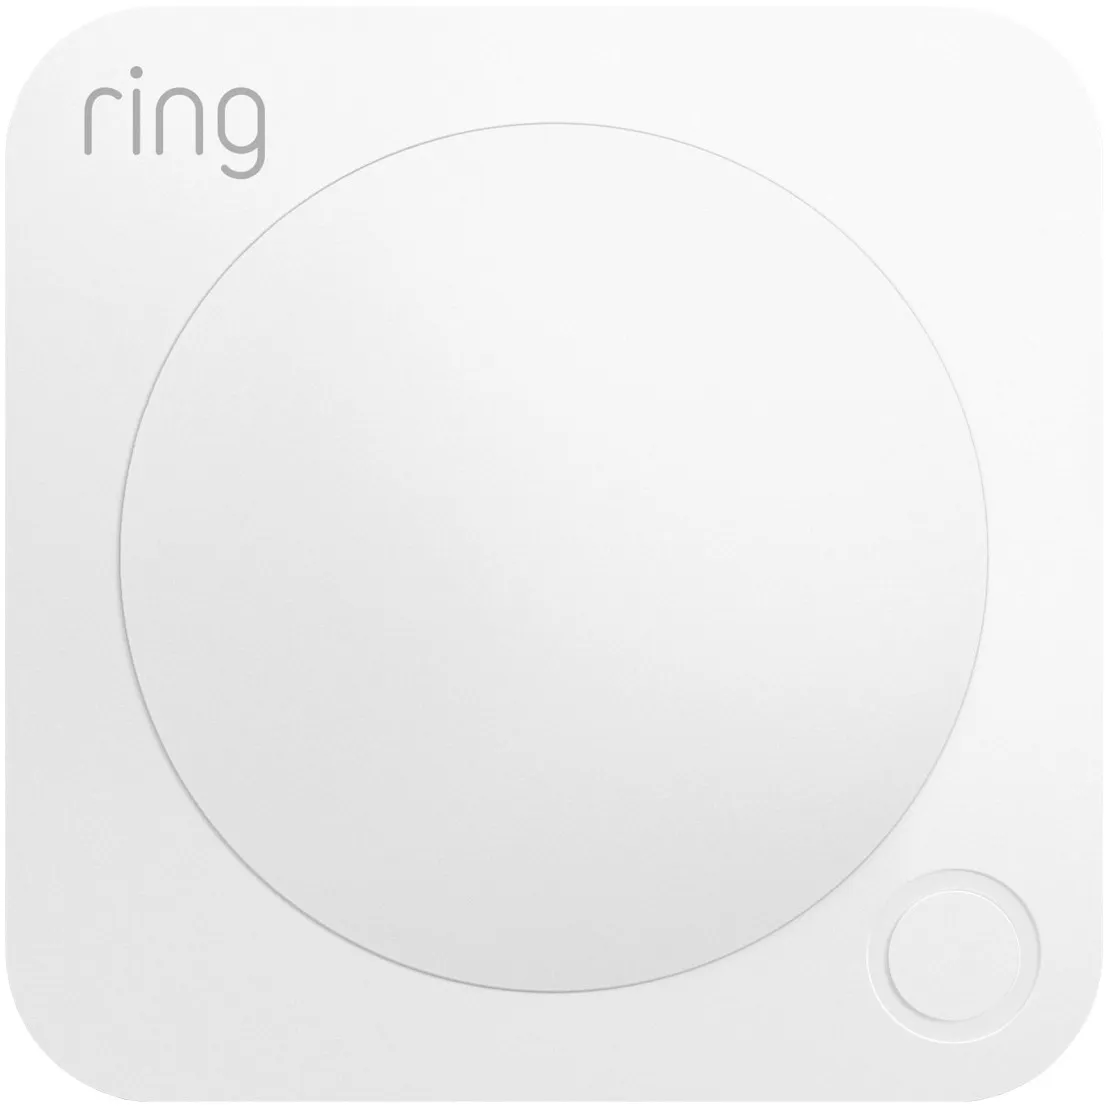 Ring Alarm Motion Detector 2nd Gen